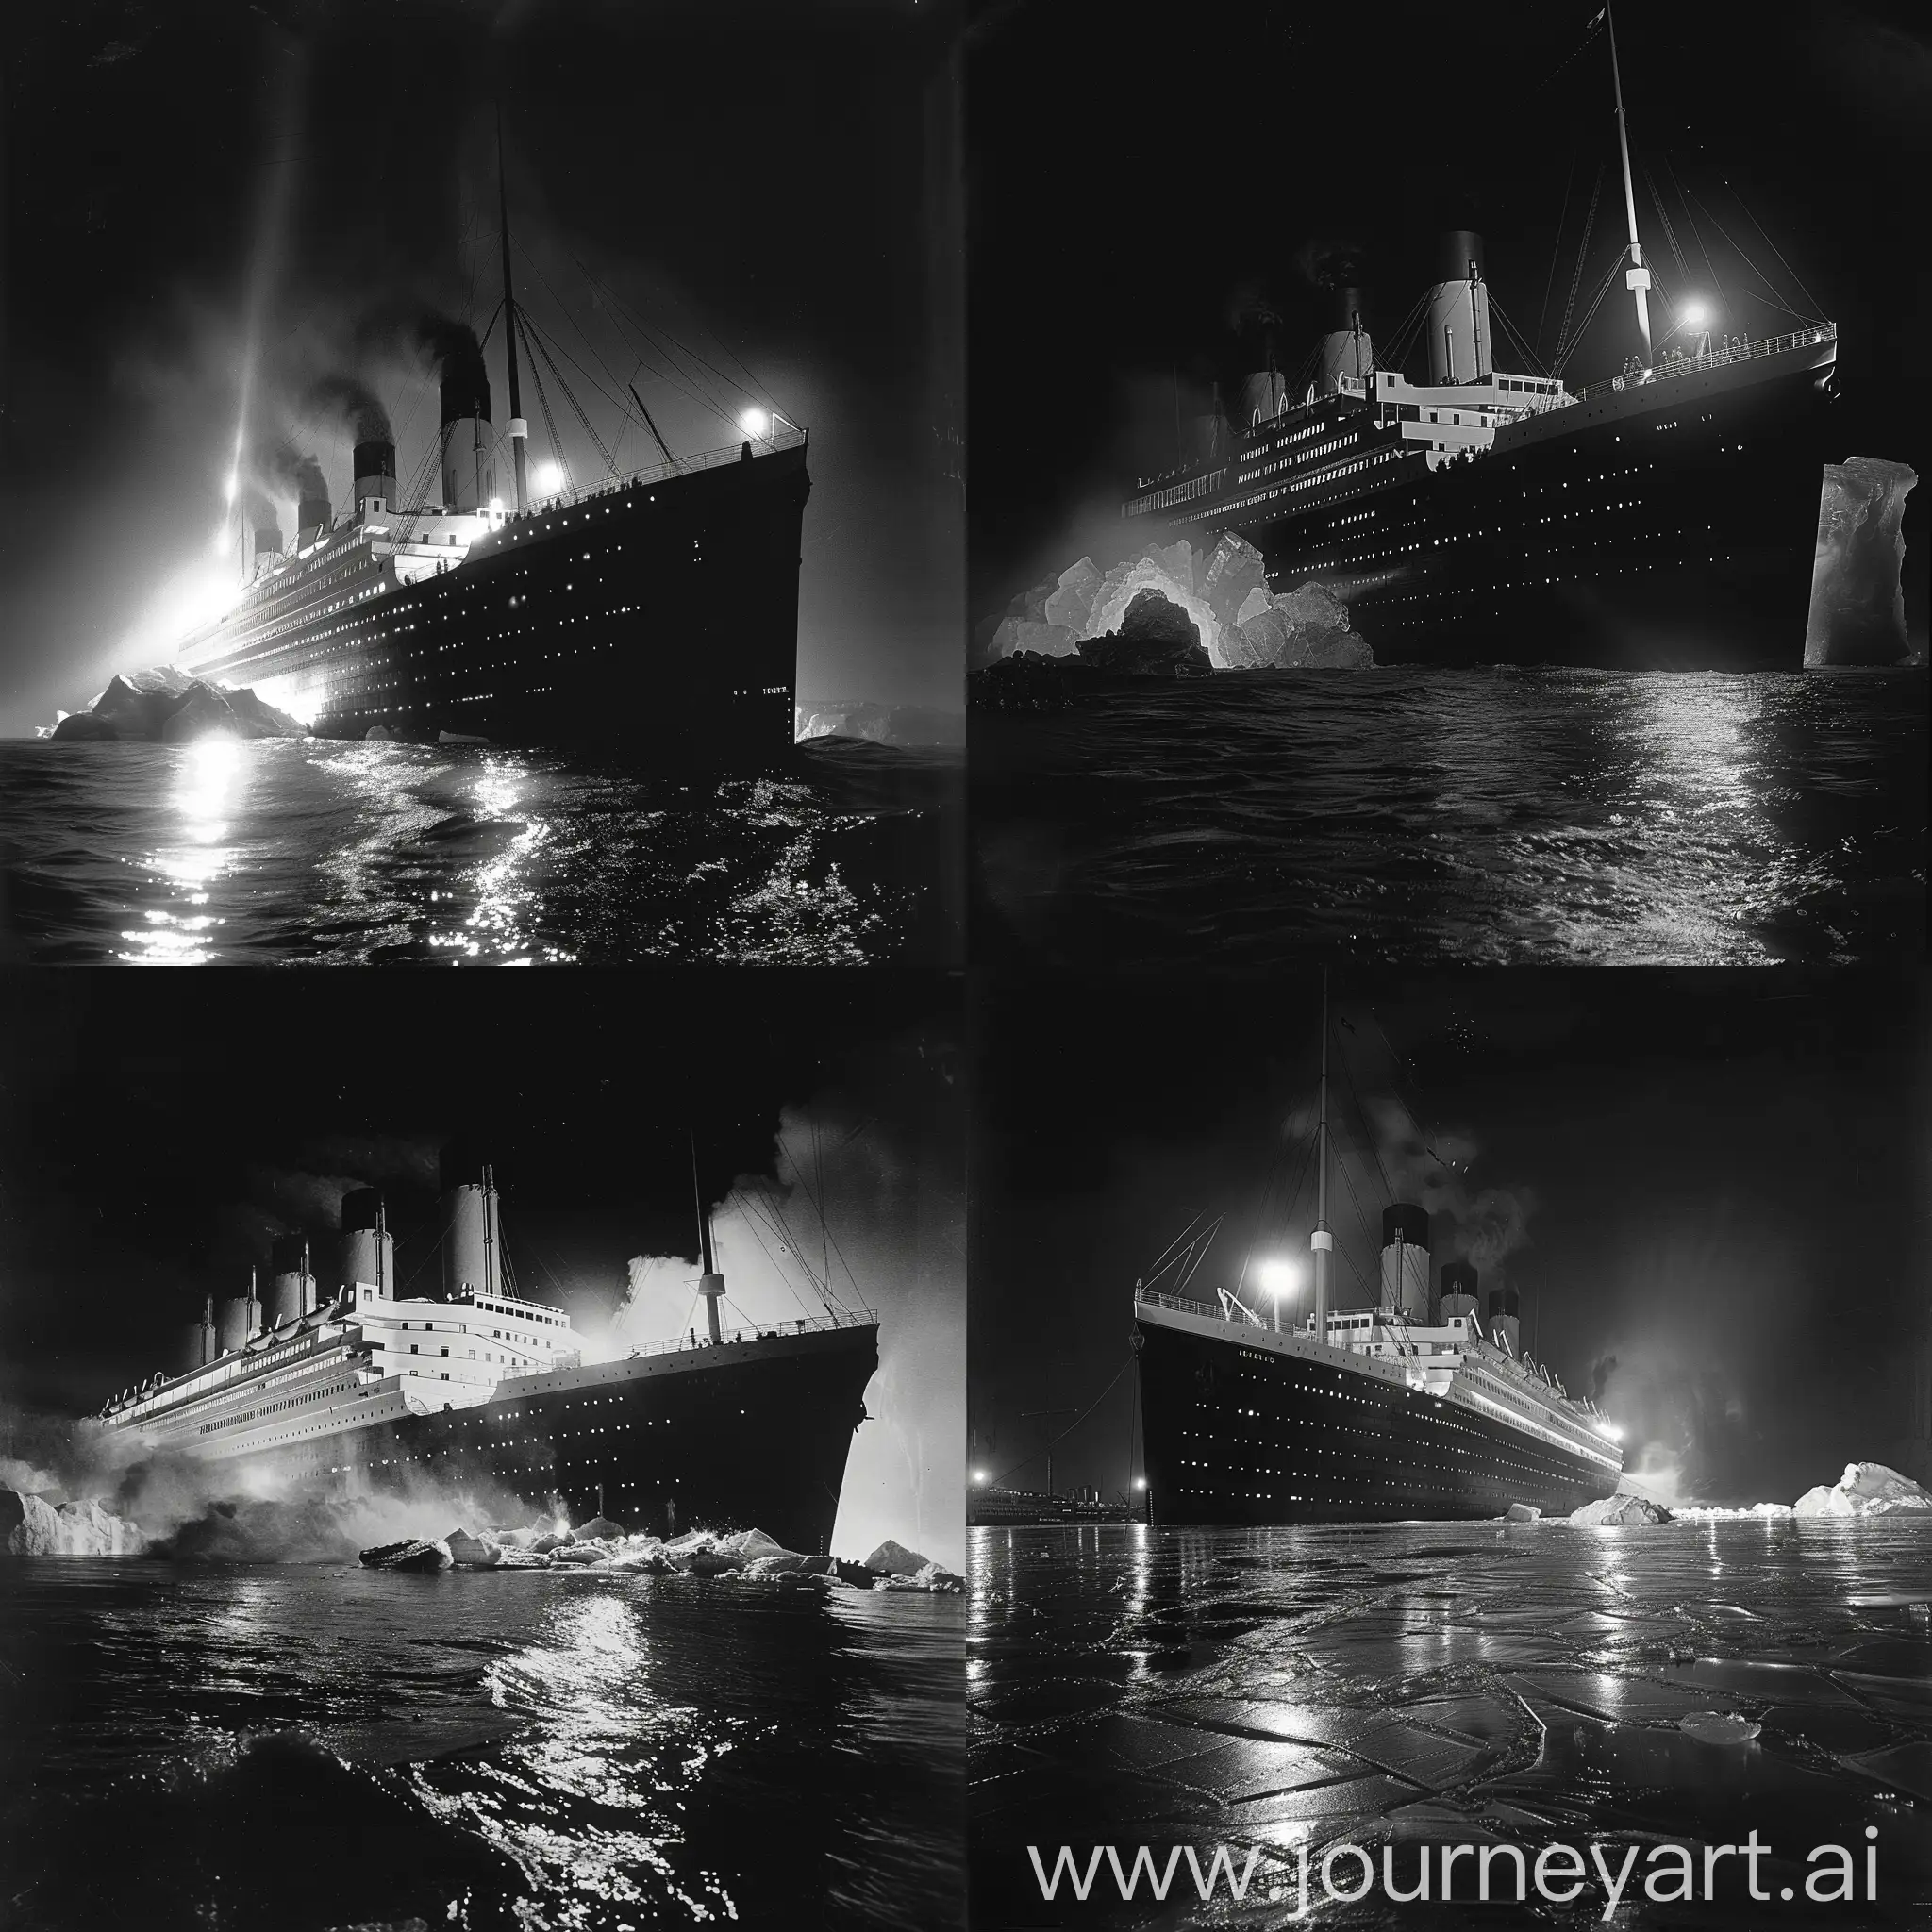 Dramatic-Midnight-Encounter-RMS-Titanic-Strikes-Iceberg